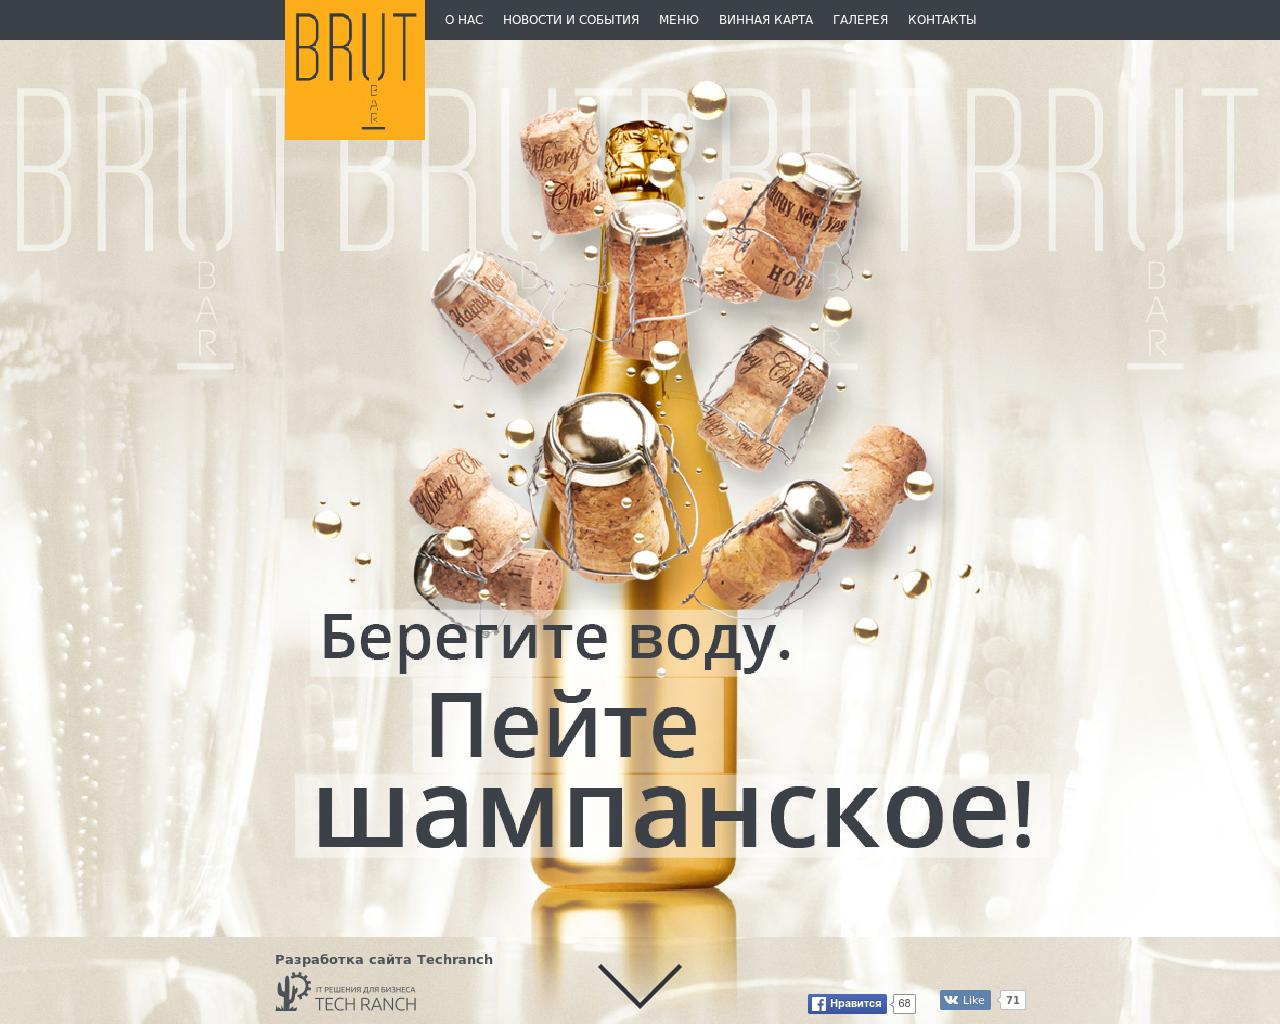 Изображение сайта barbrut.ru в разрешении 1280x1024